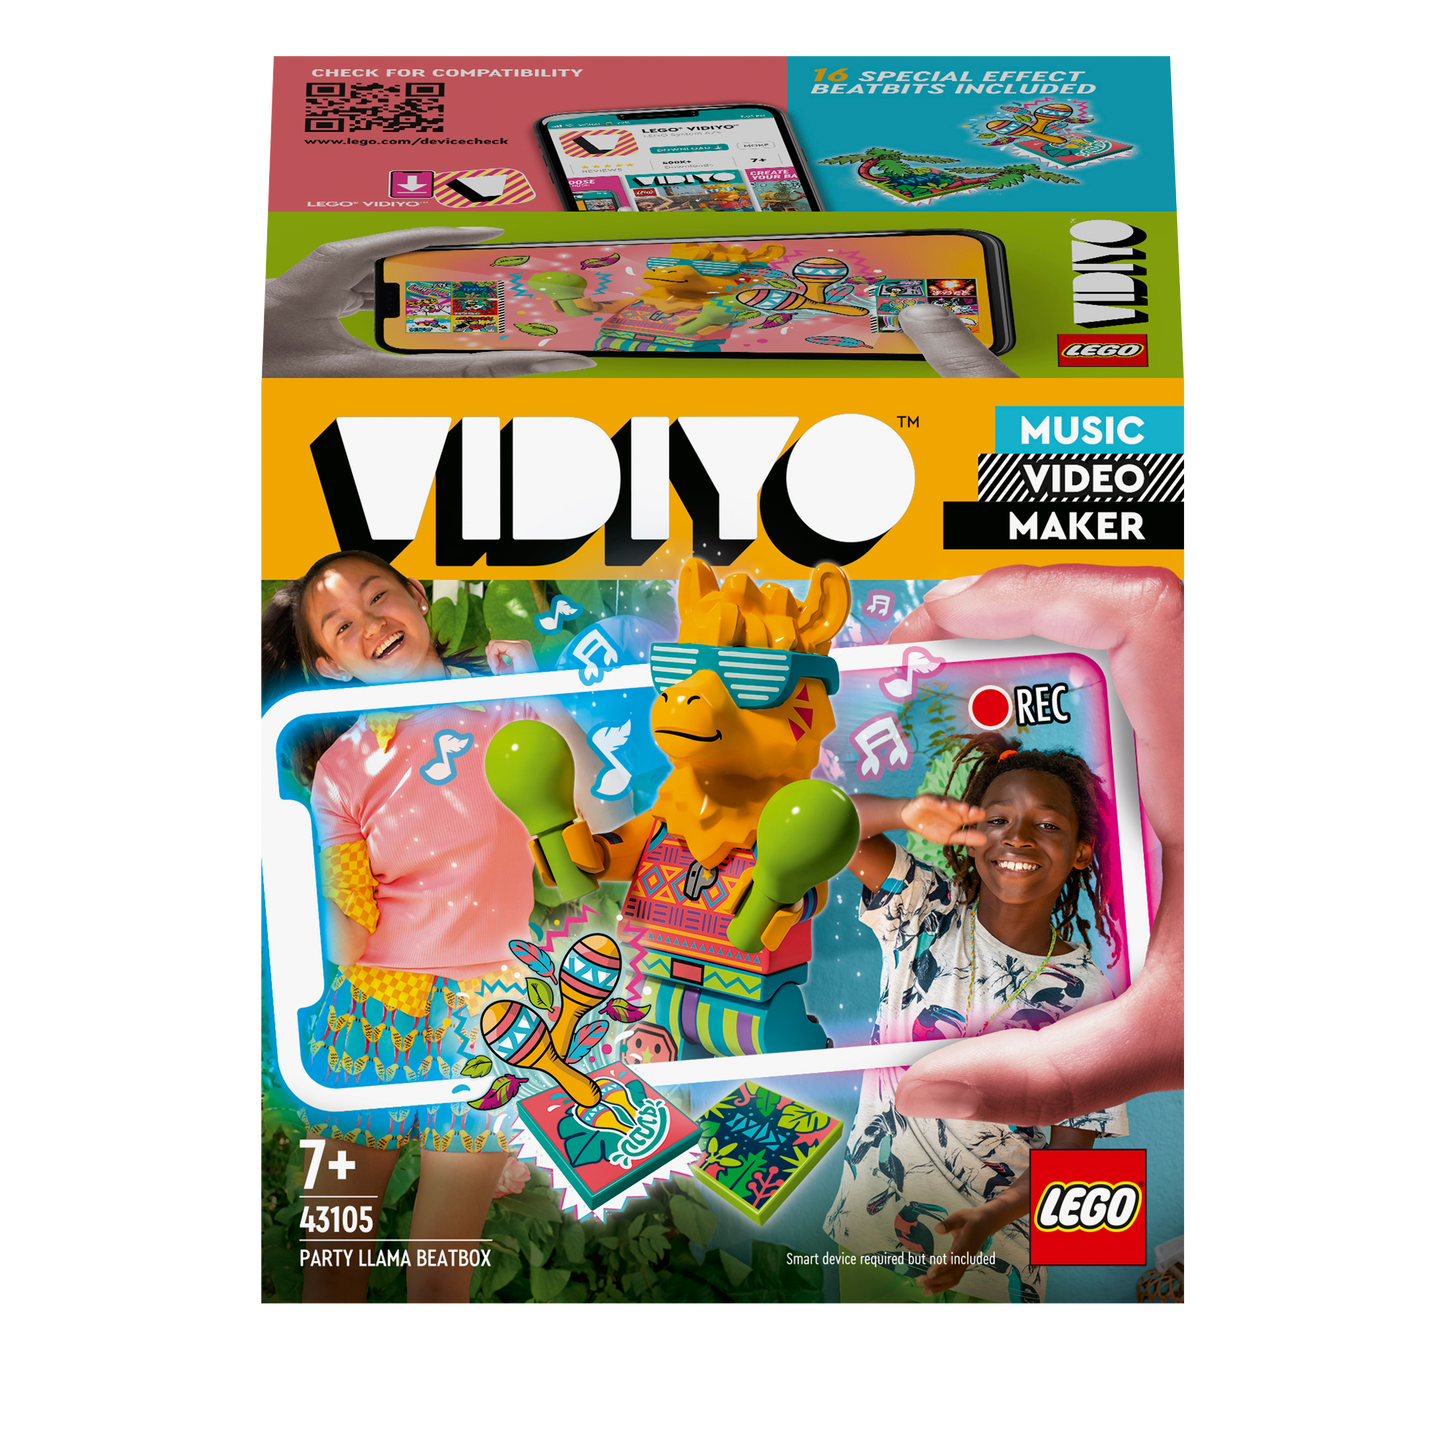 43105 LEGO Vidiyo - Party Llama BeatBox